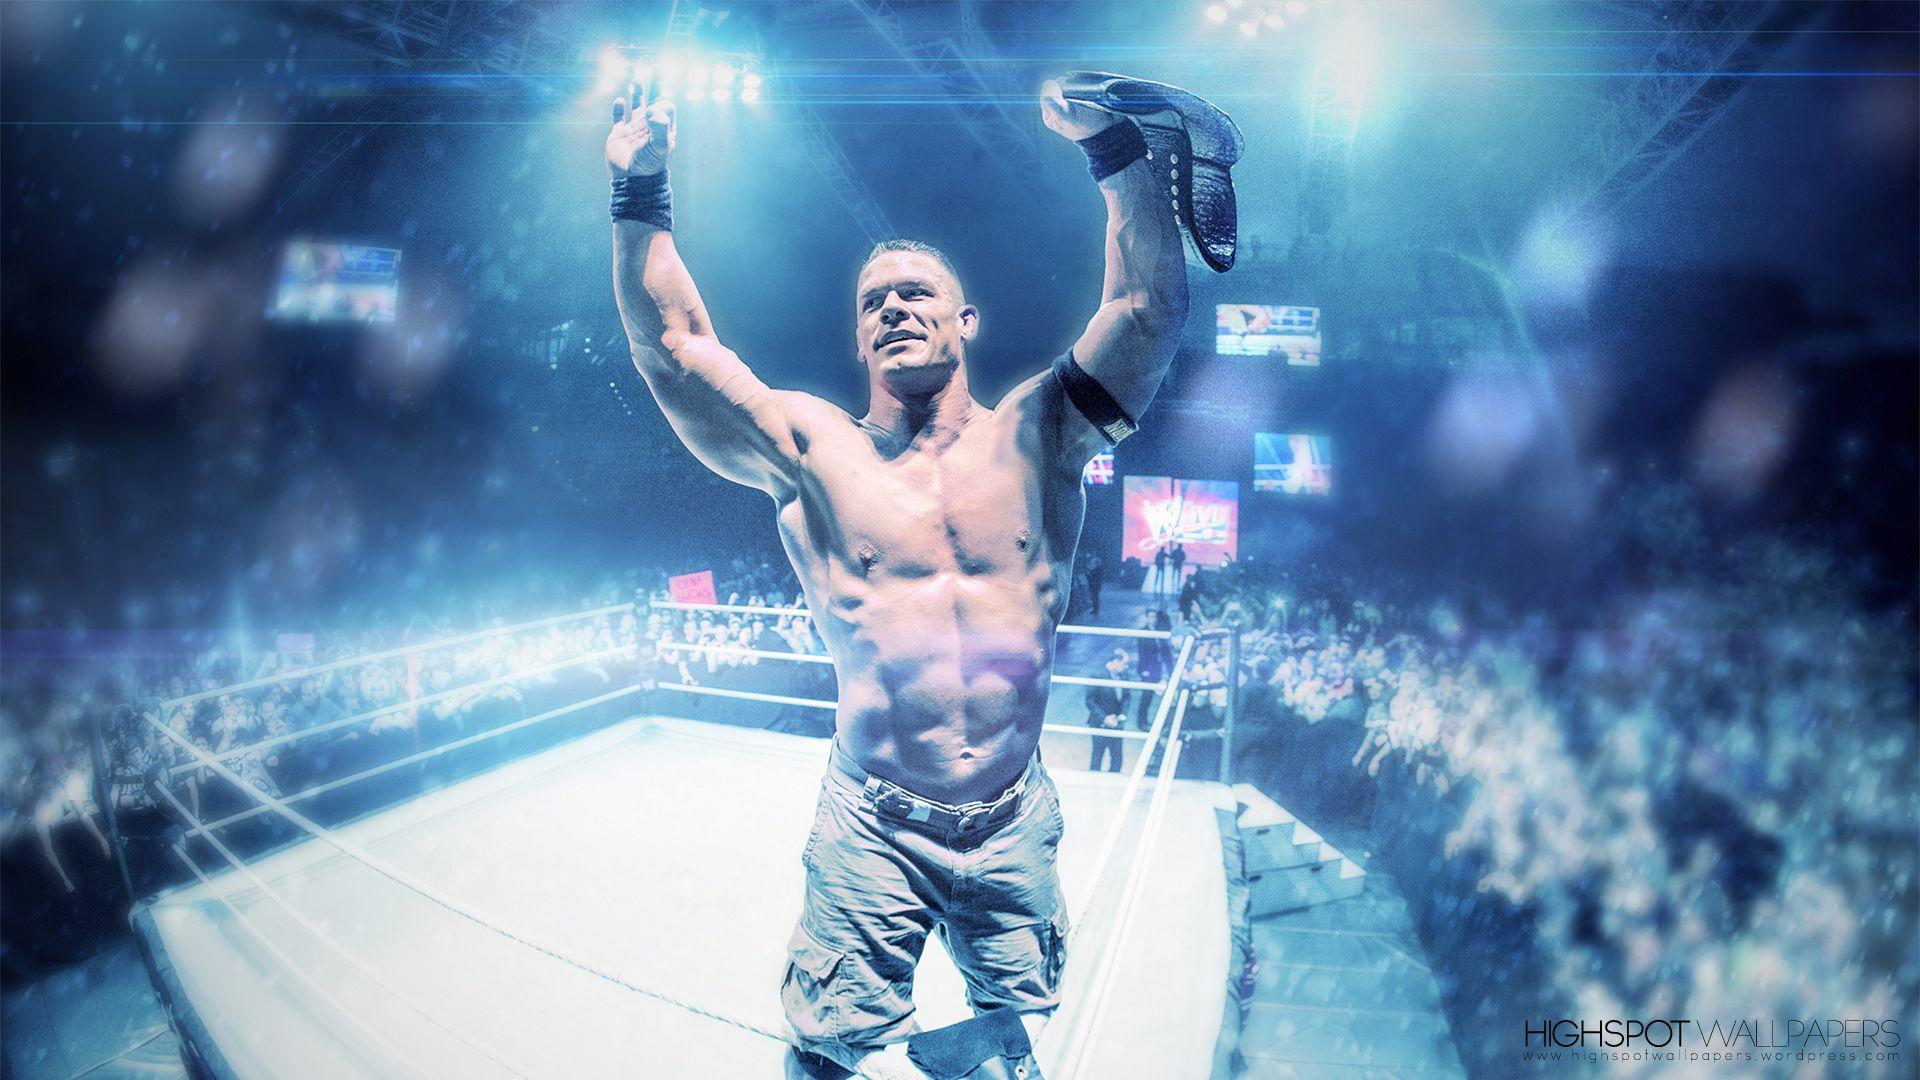 John Cena Vibrant Series Wallpaper. Highspot Wrestling Wallpaper